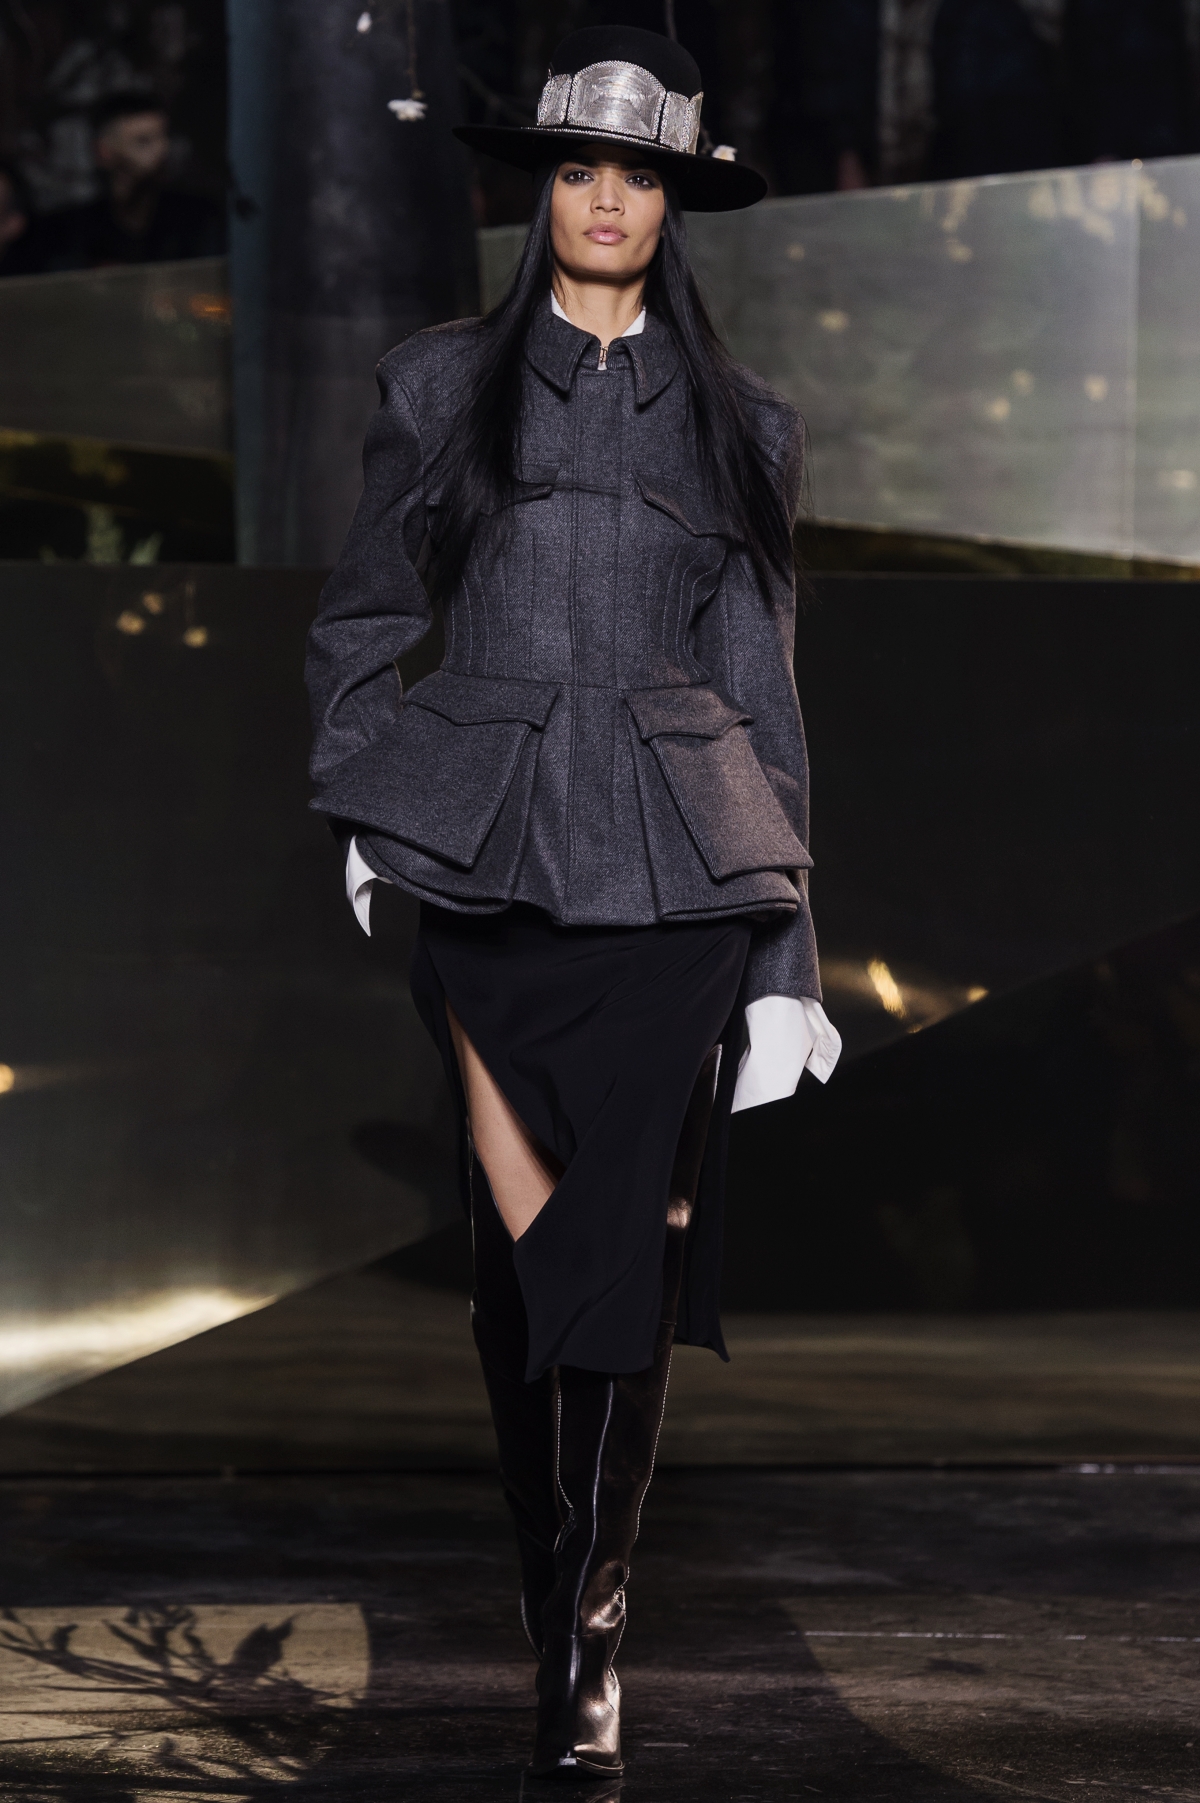 Paris Fashion Week: H&M brings diversity to the runway with transgender ...